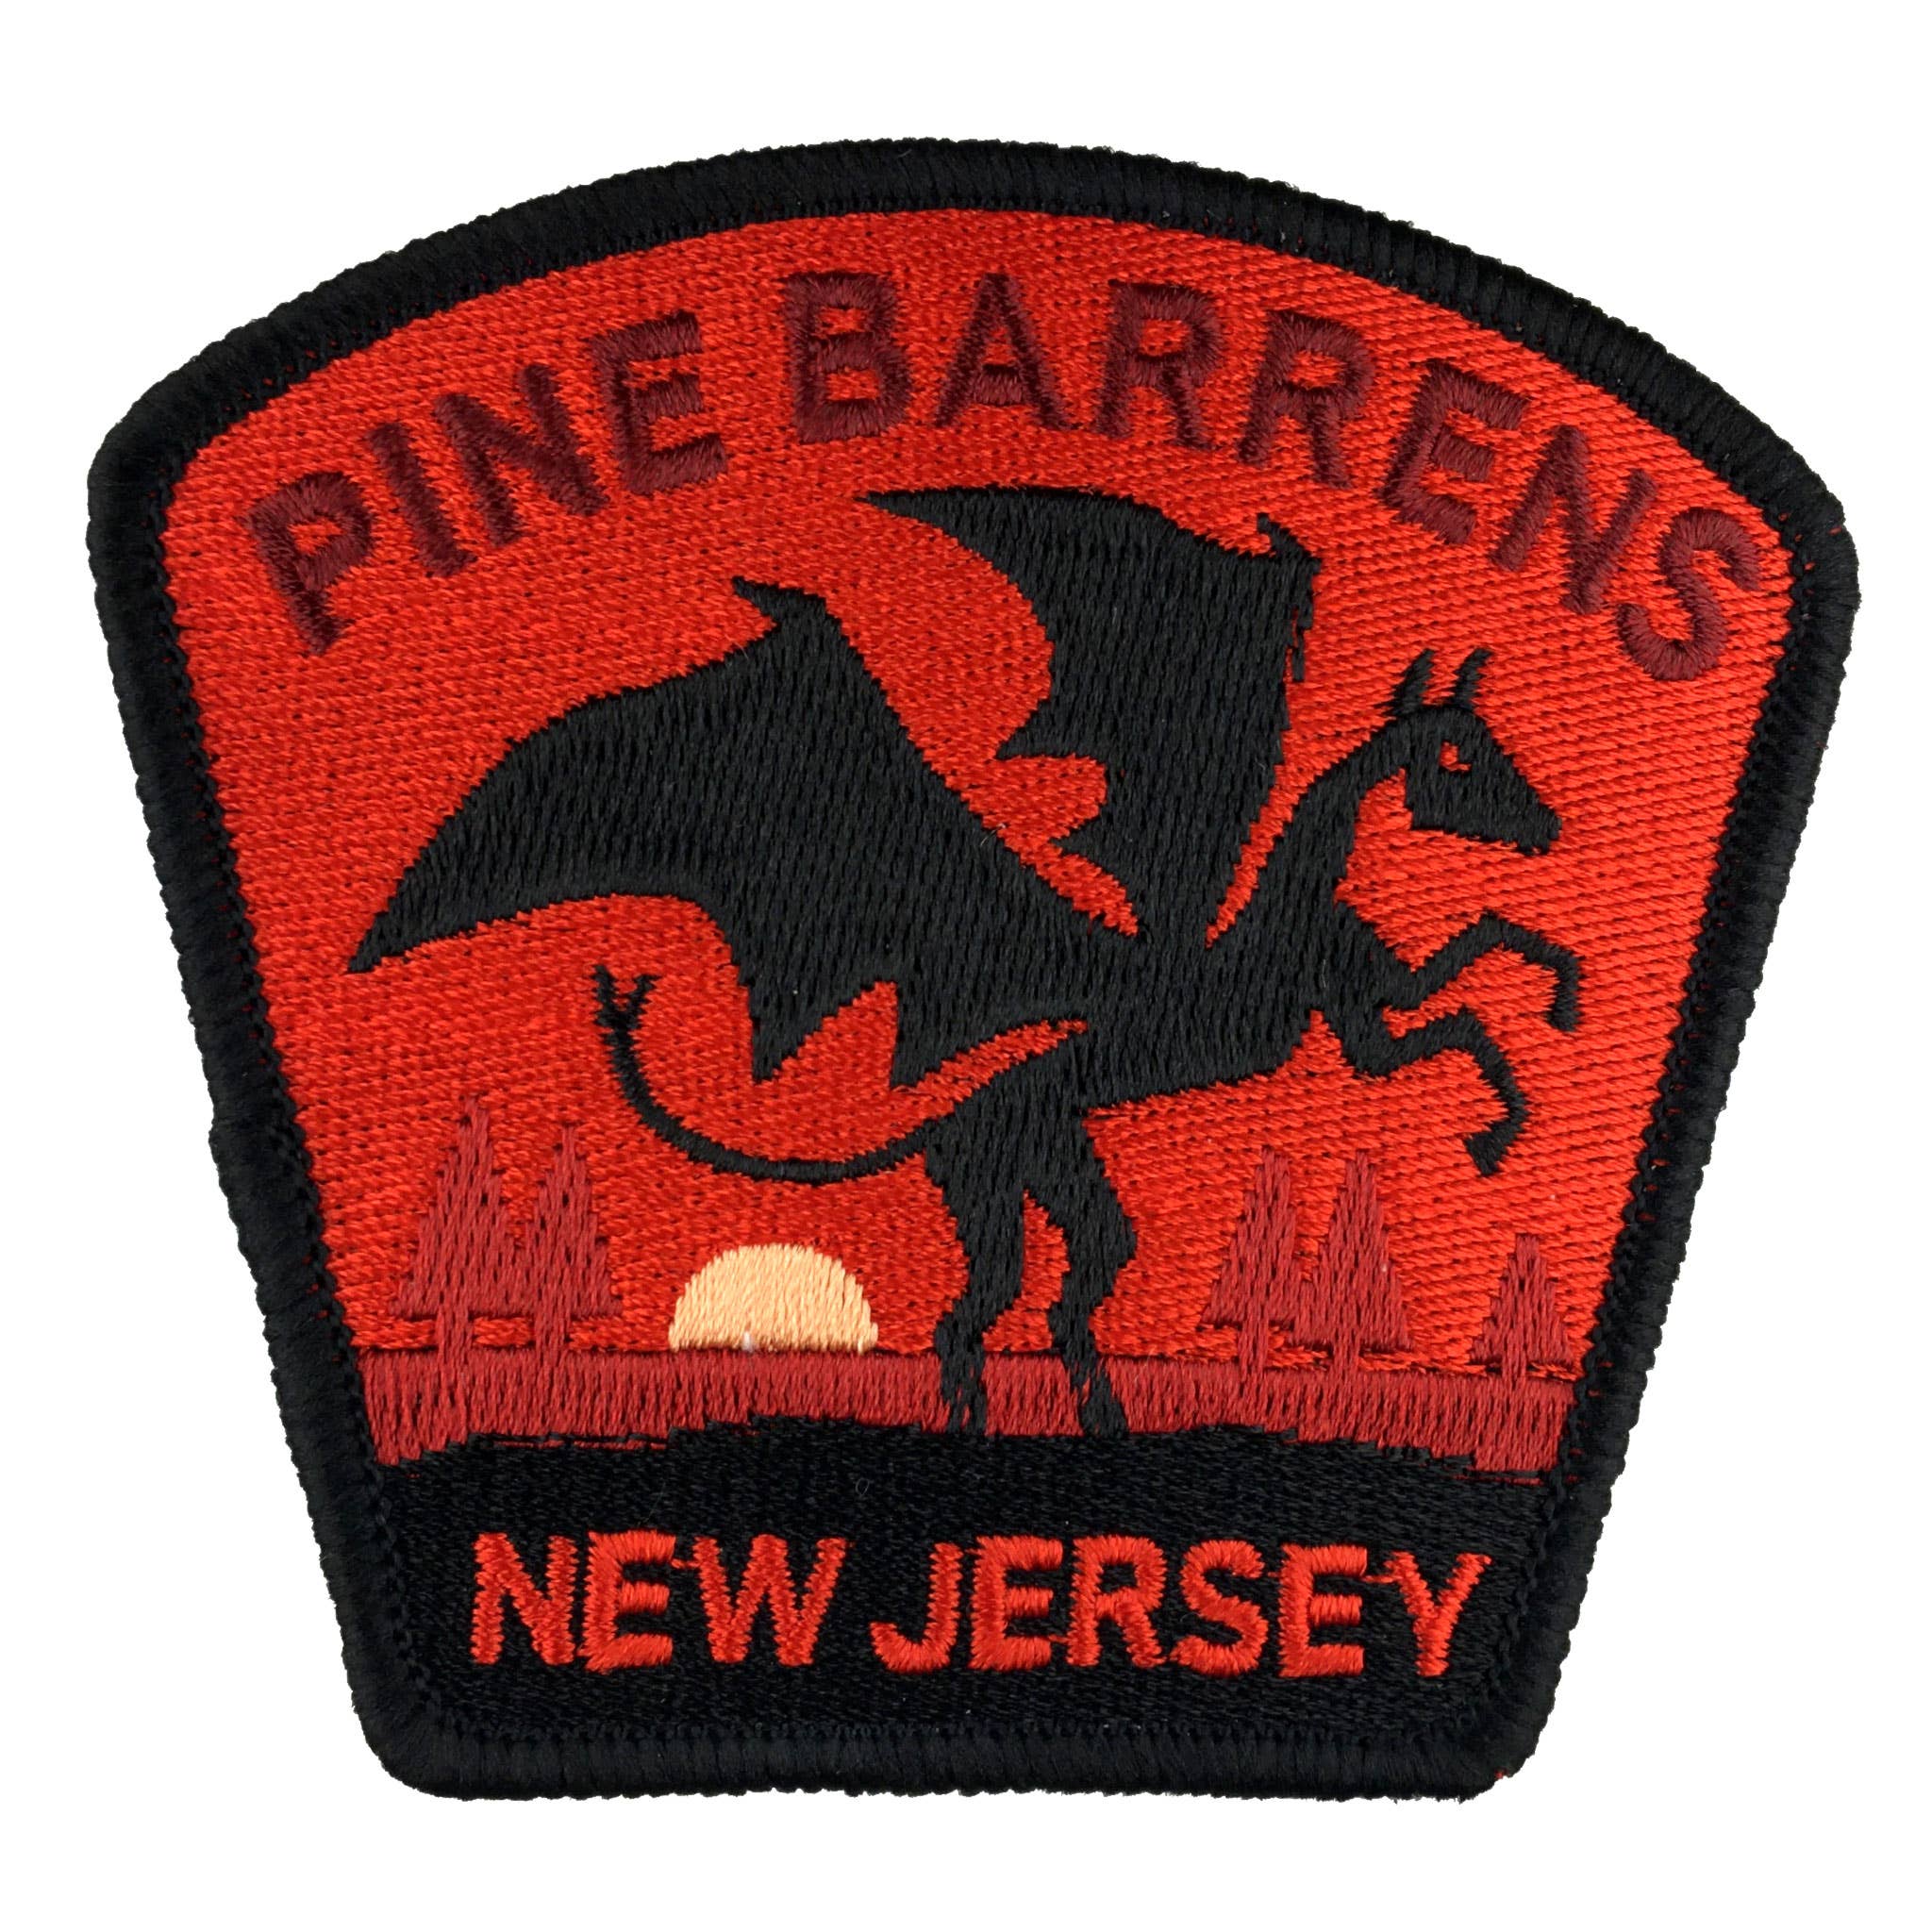 Pine Barrens New Jersey Travel Patch (Jersey Devil)